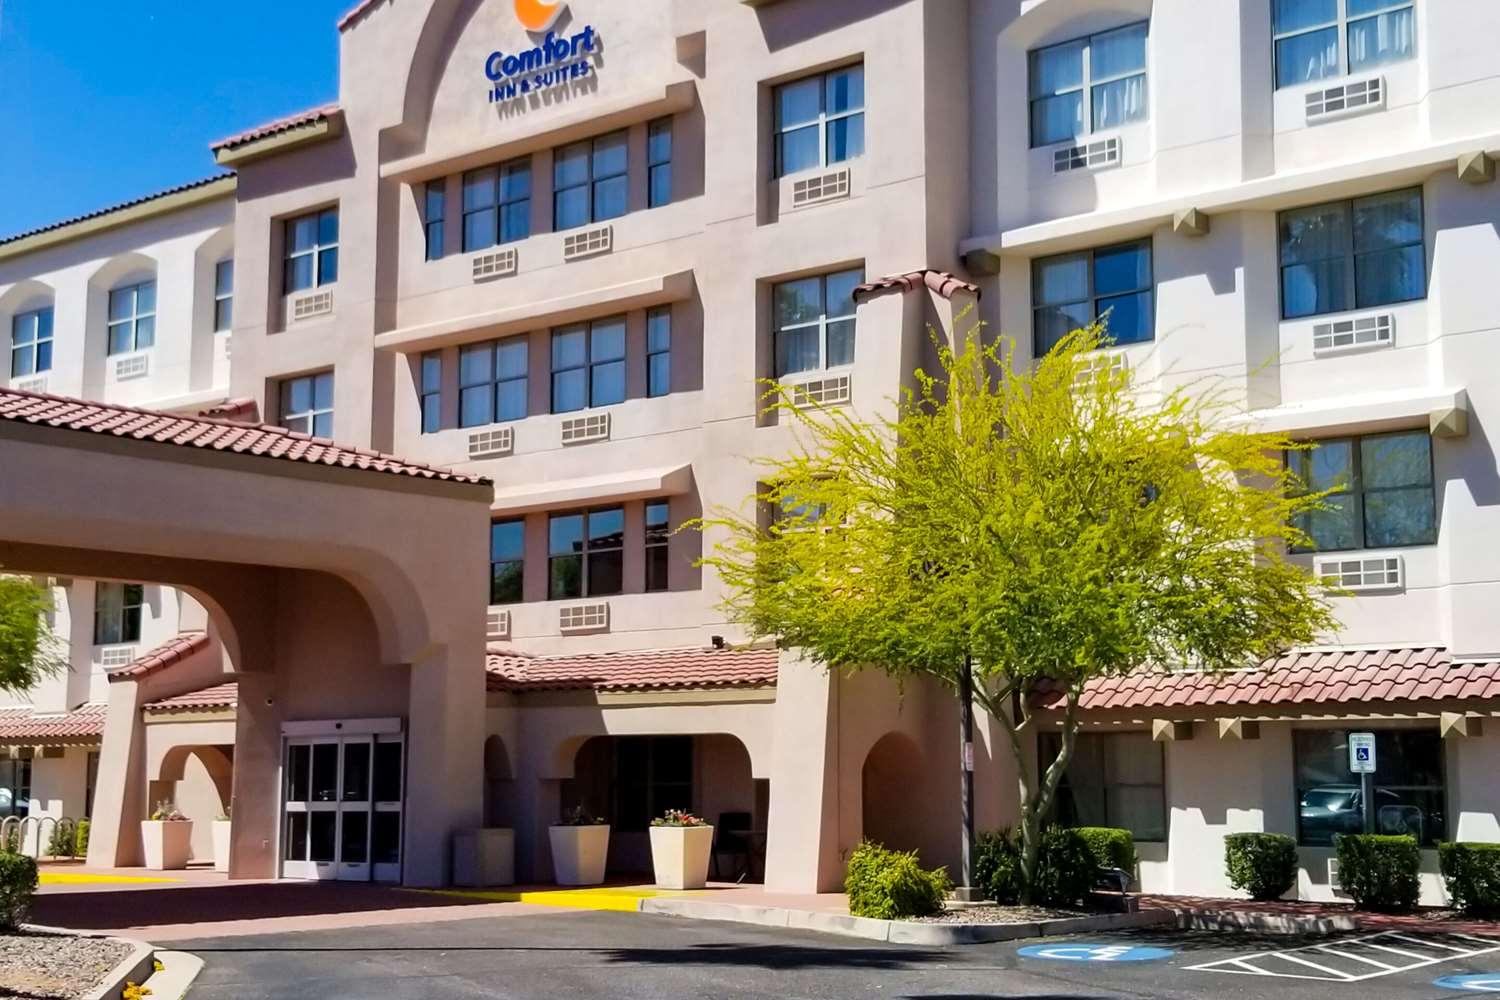 Comfort Inn and Suites Tempe in Tempe, AZ